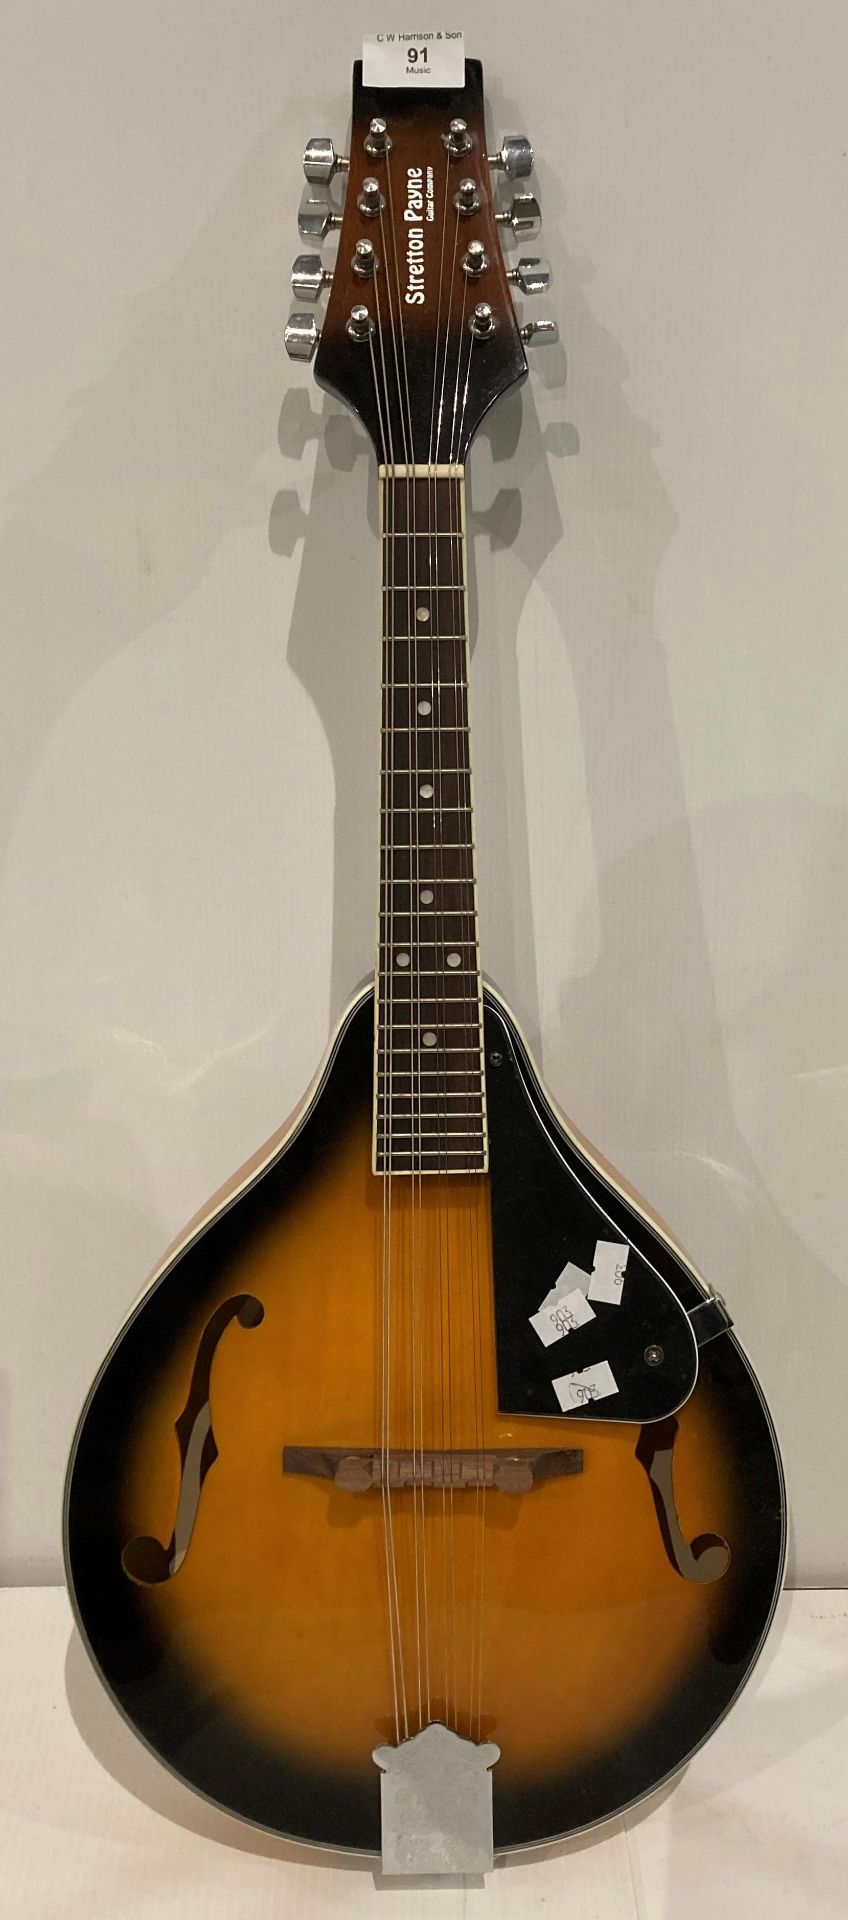 Stretton Payne mandolin eight string (Saleroom location: S3)